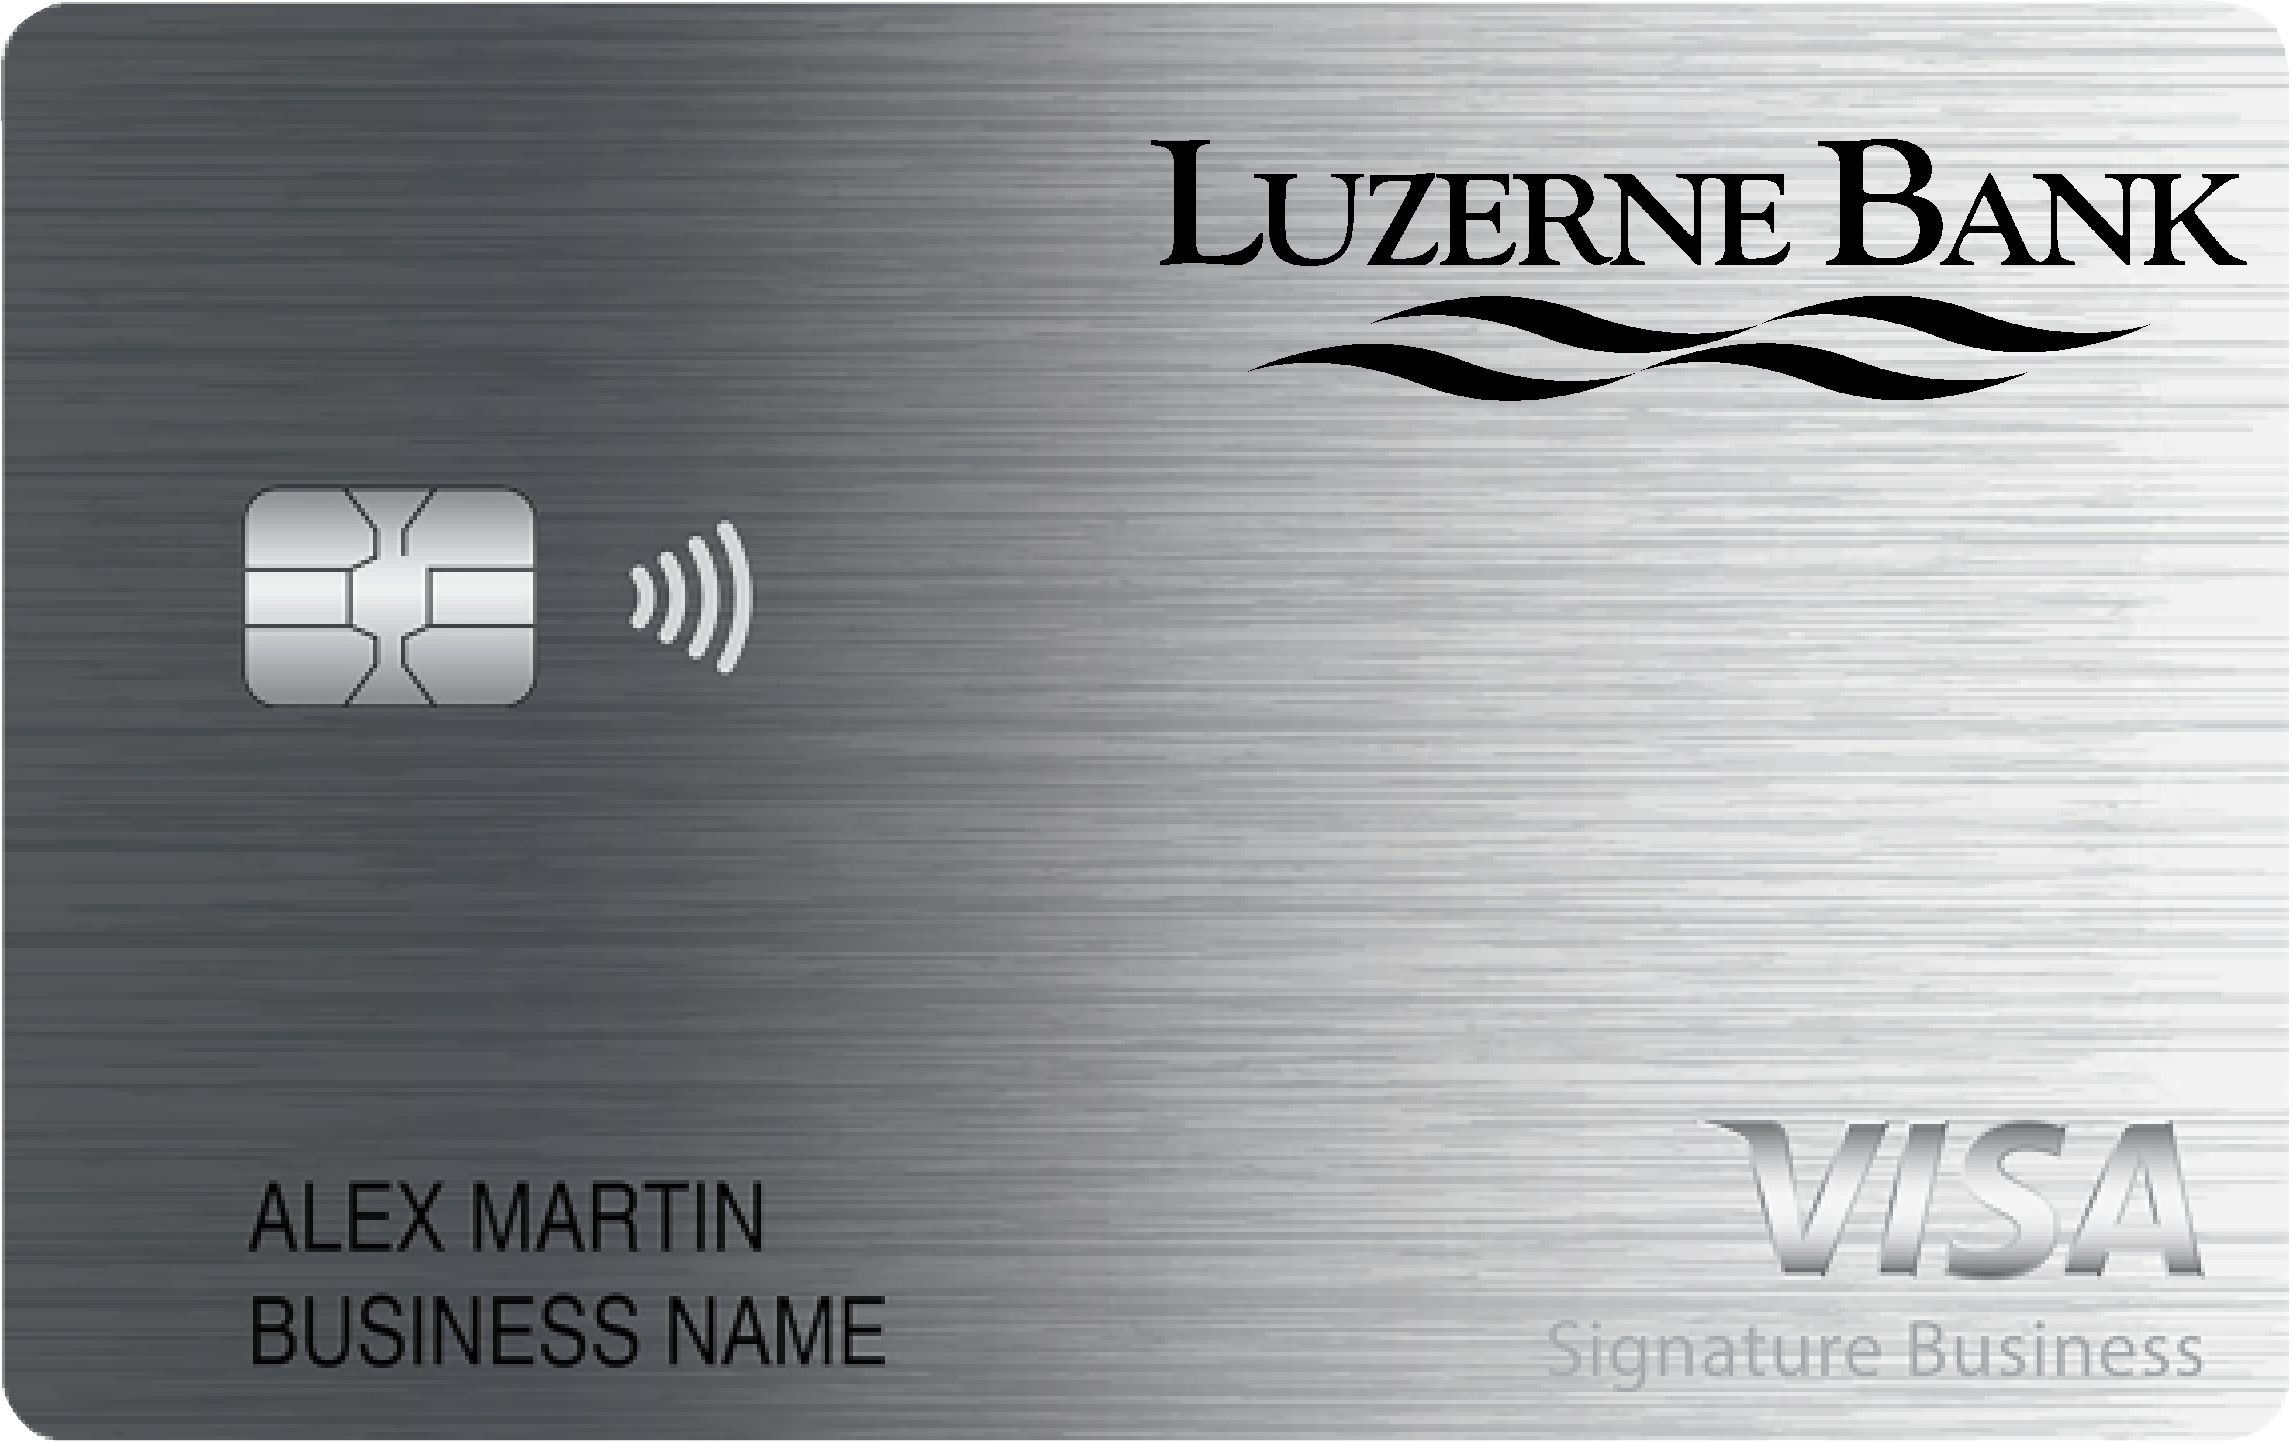 Luzerne Bank Smart Business Rewards Card